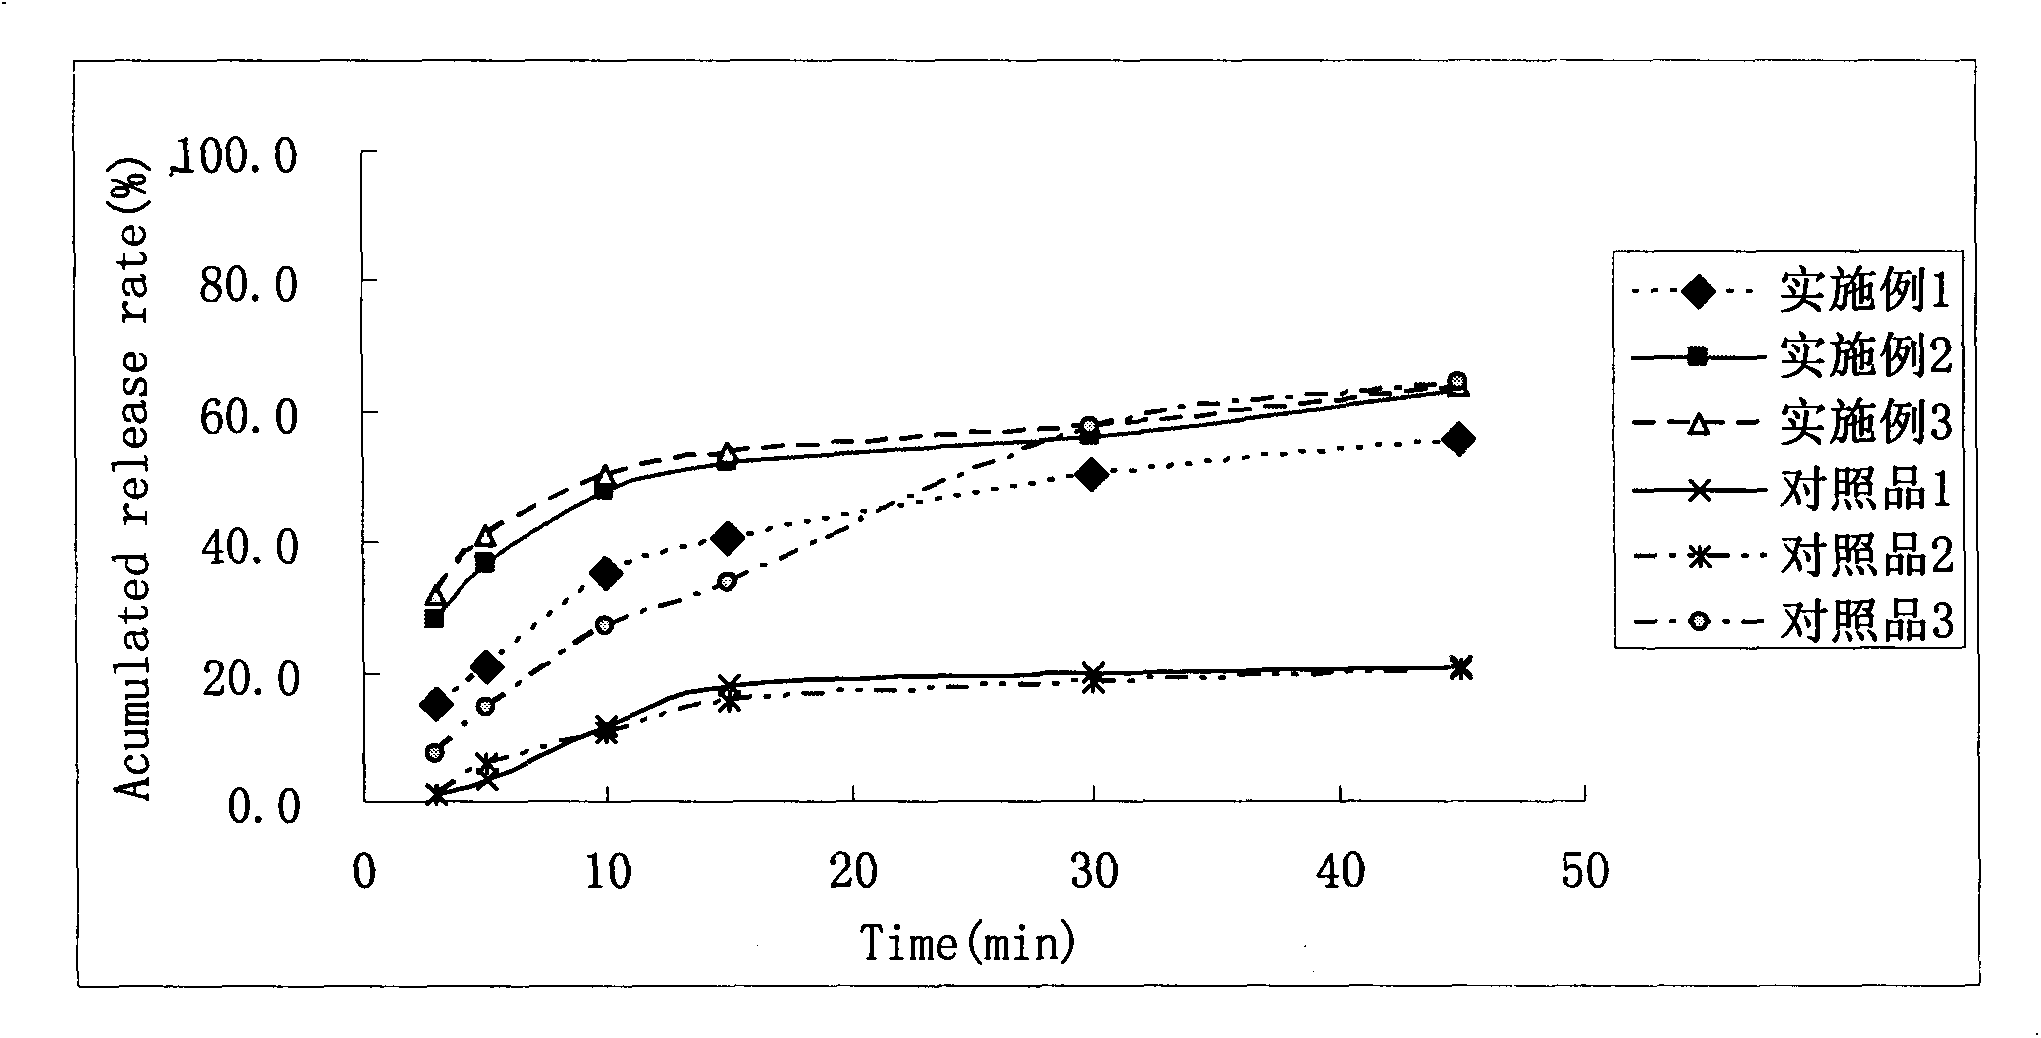 Dispersion preparation containing dabigatran etexilate